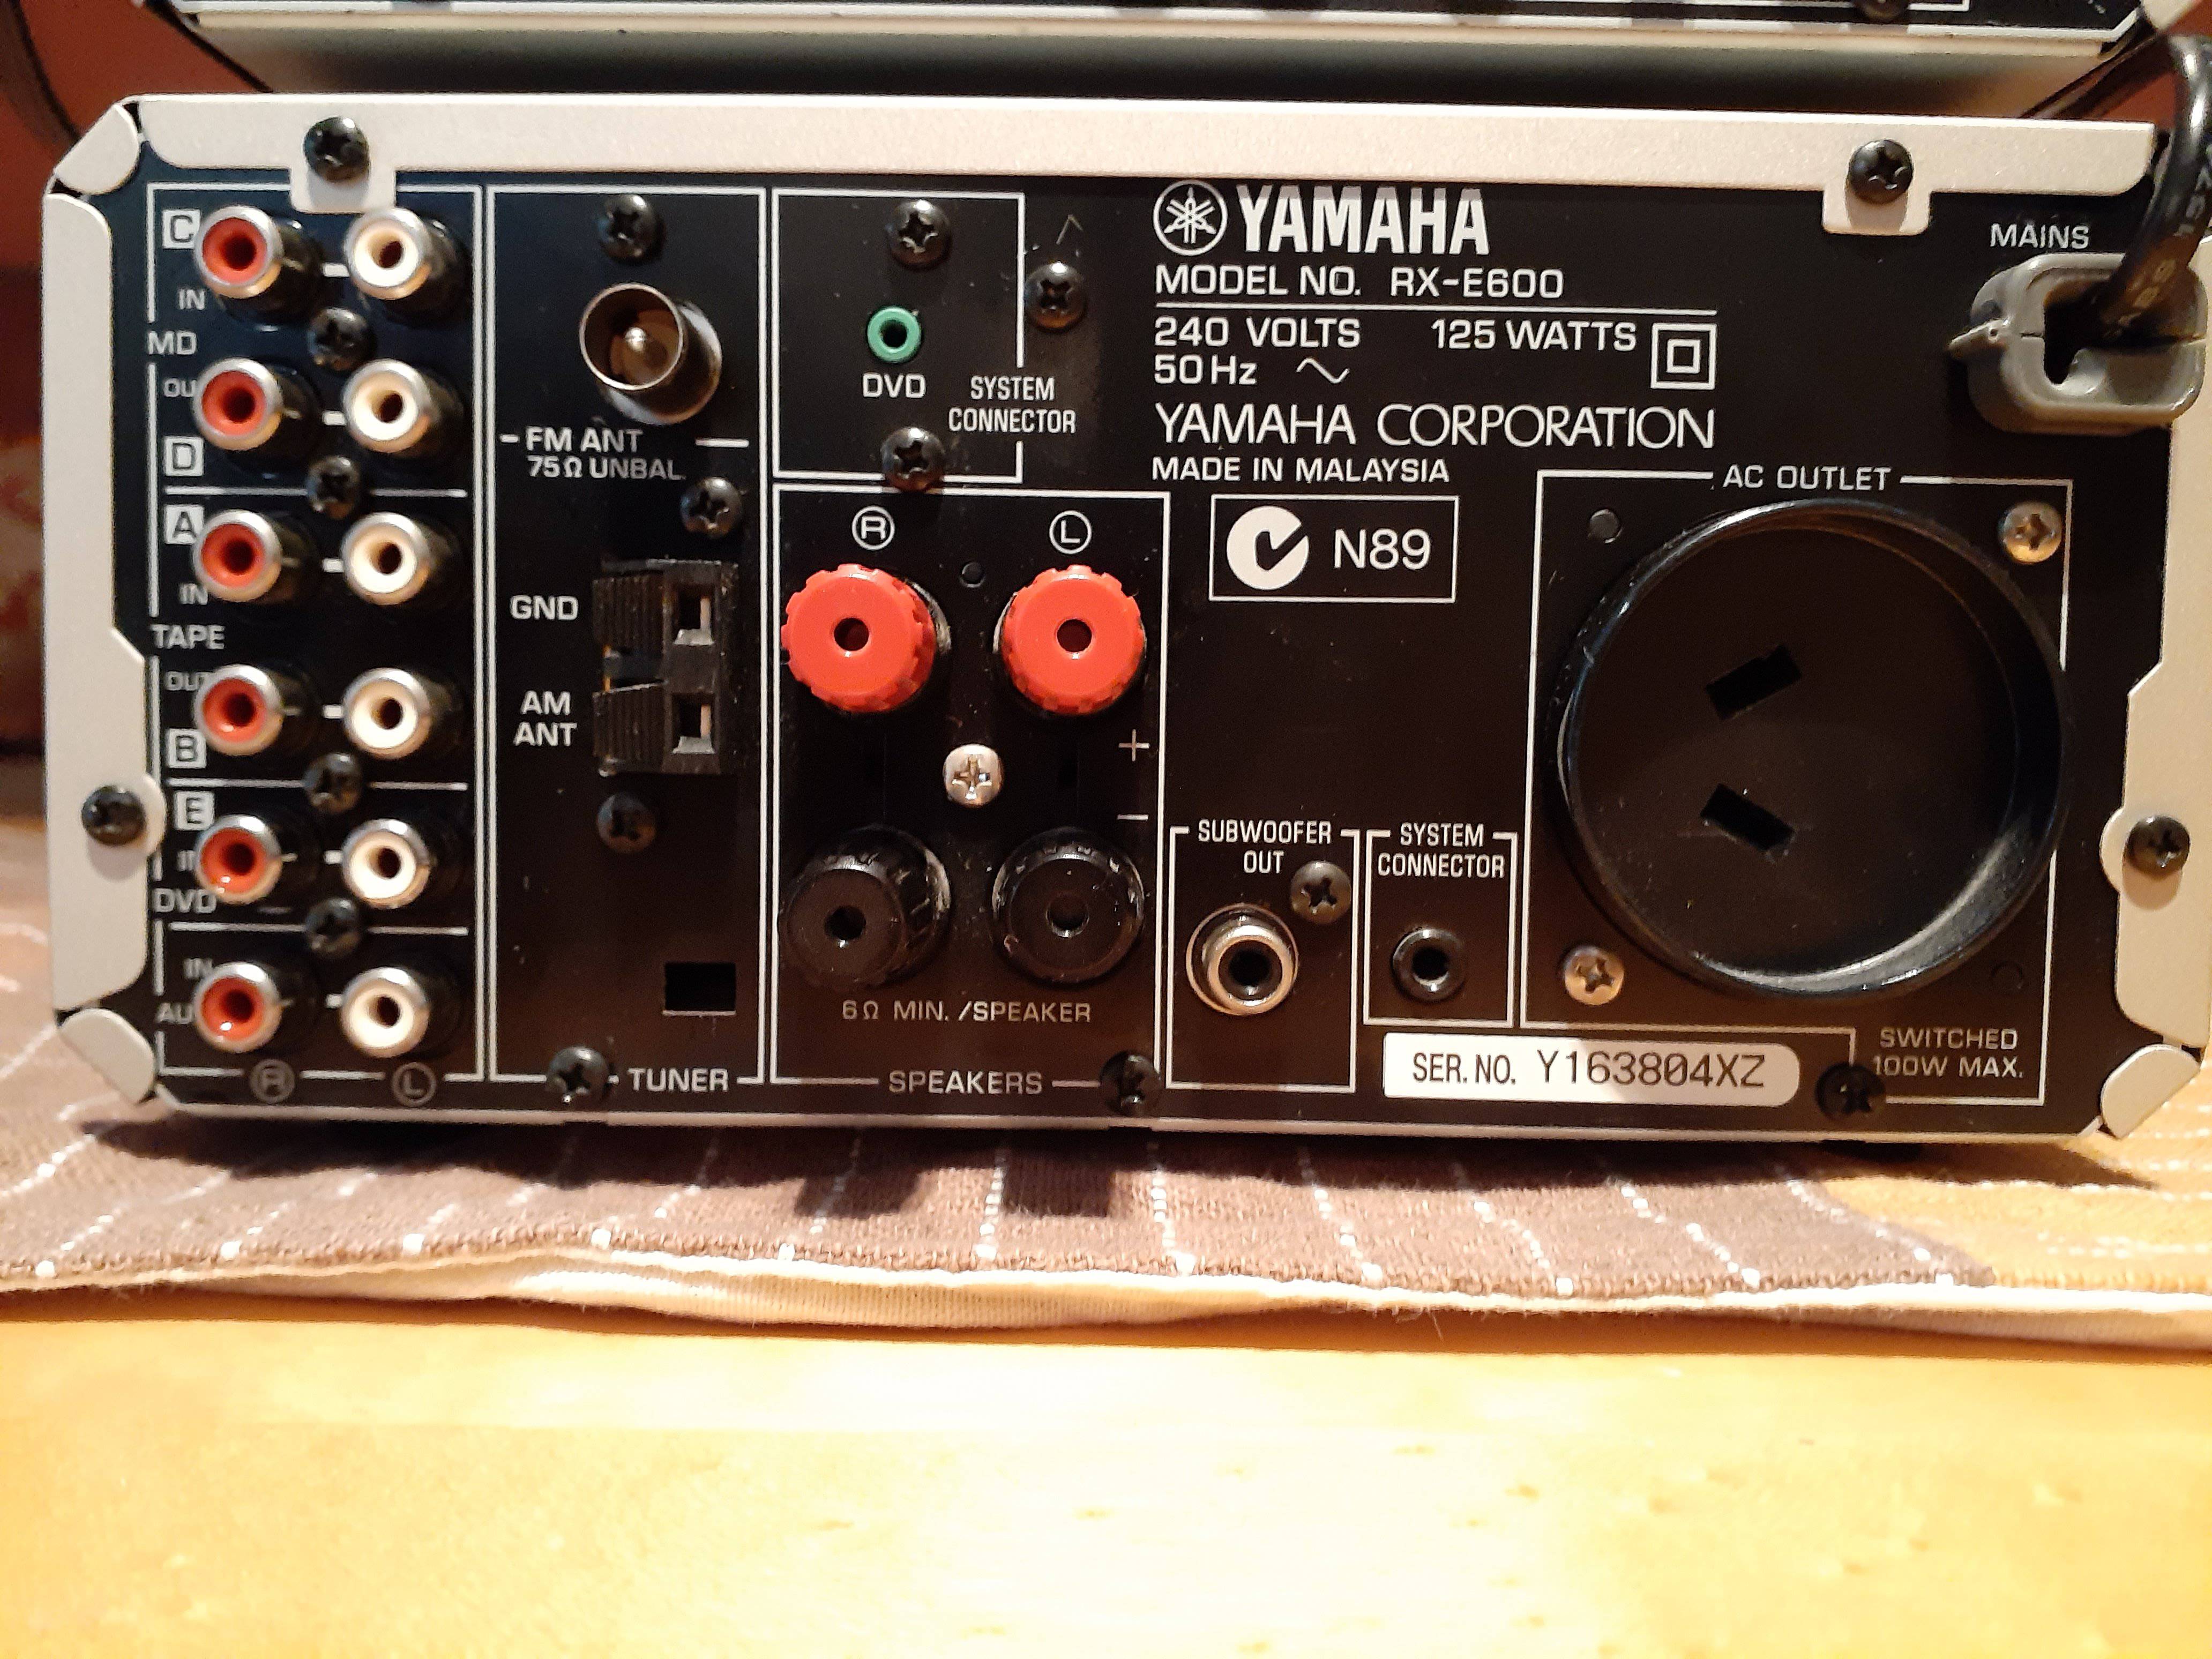 Yamaha RX-E600